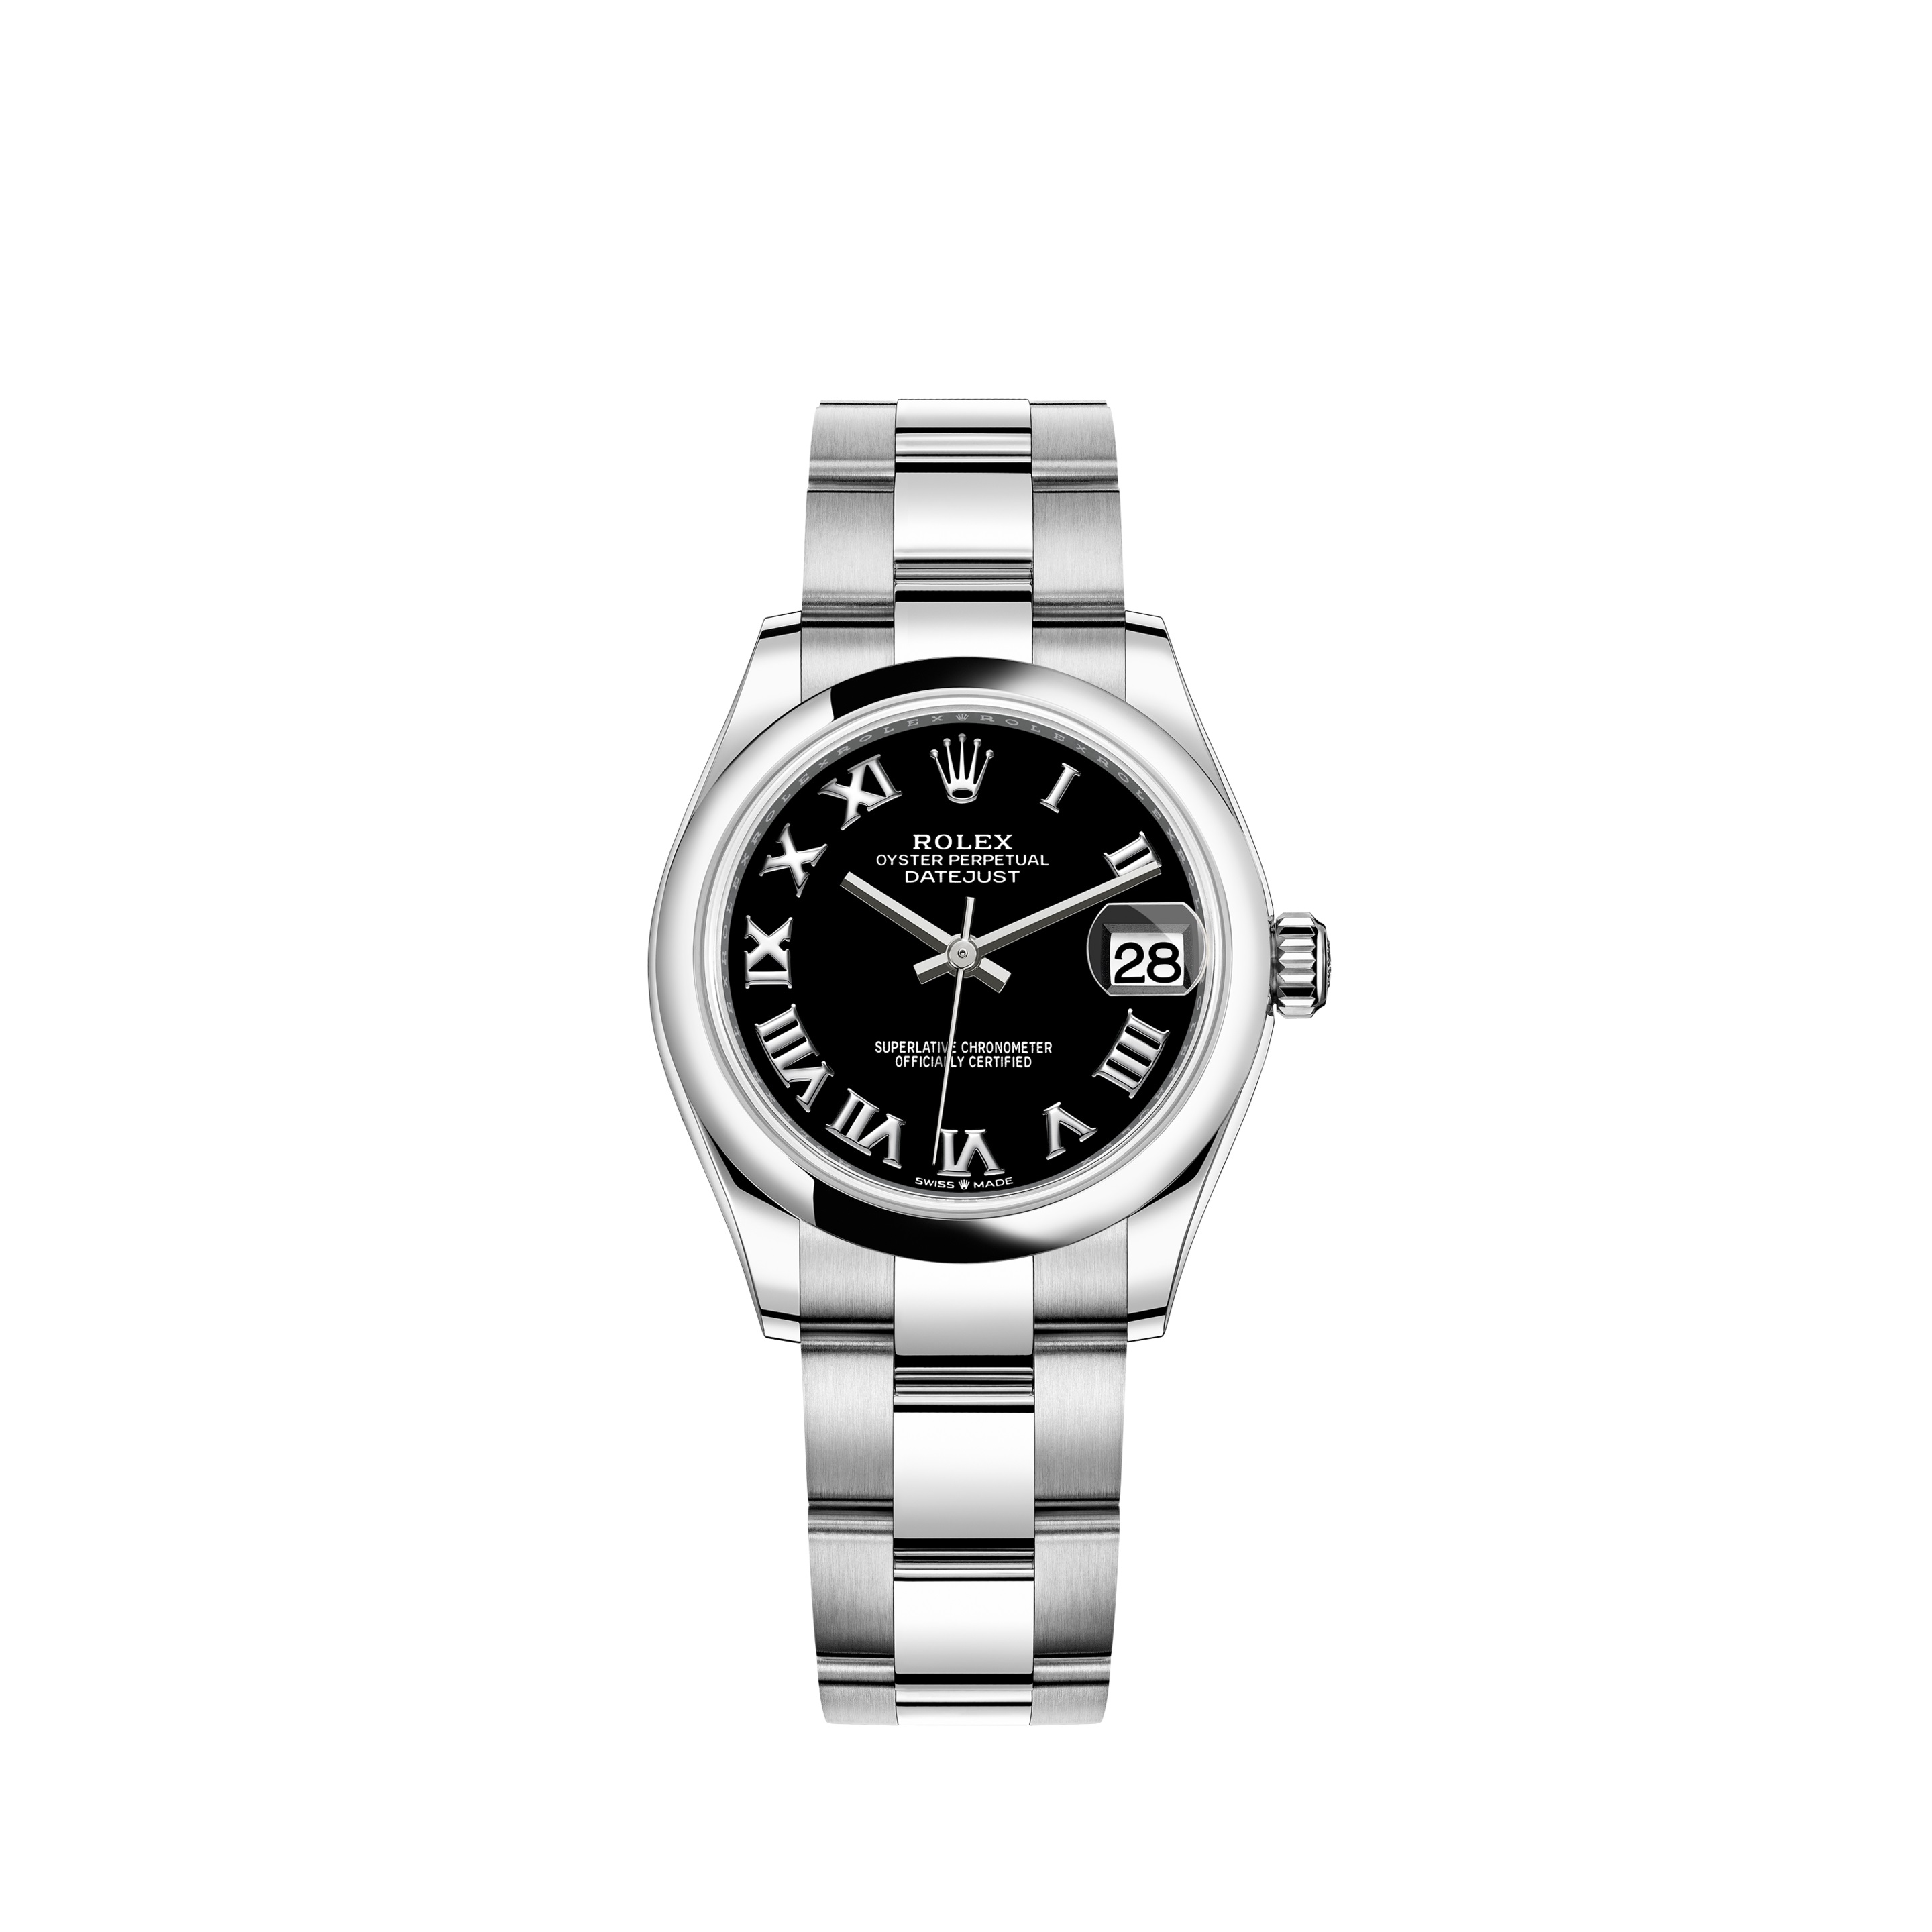 Datejust 31 278240 Stainless Steel Watch (Bright Black)